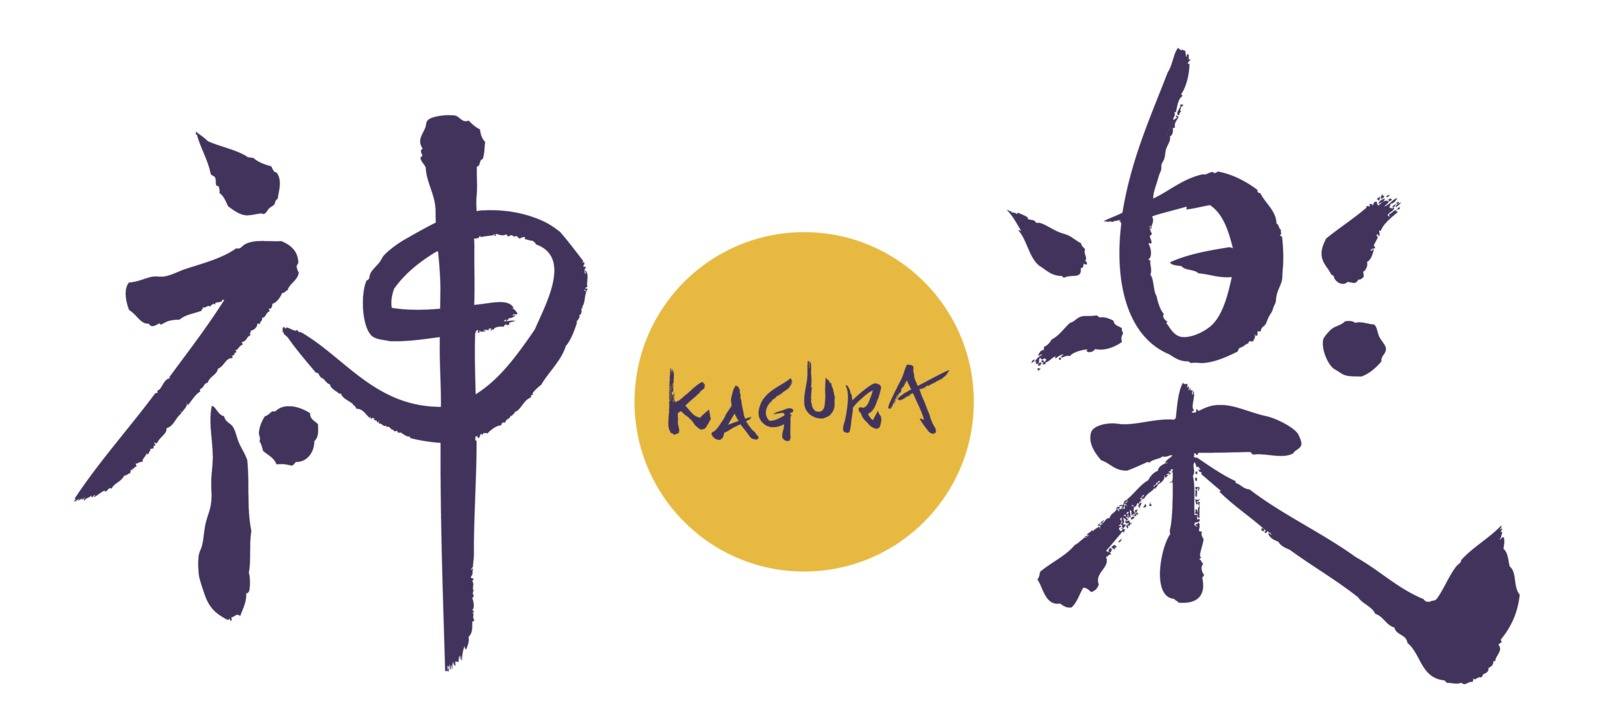 The character Kagura and full moon by Umbrella